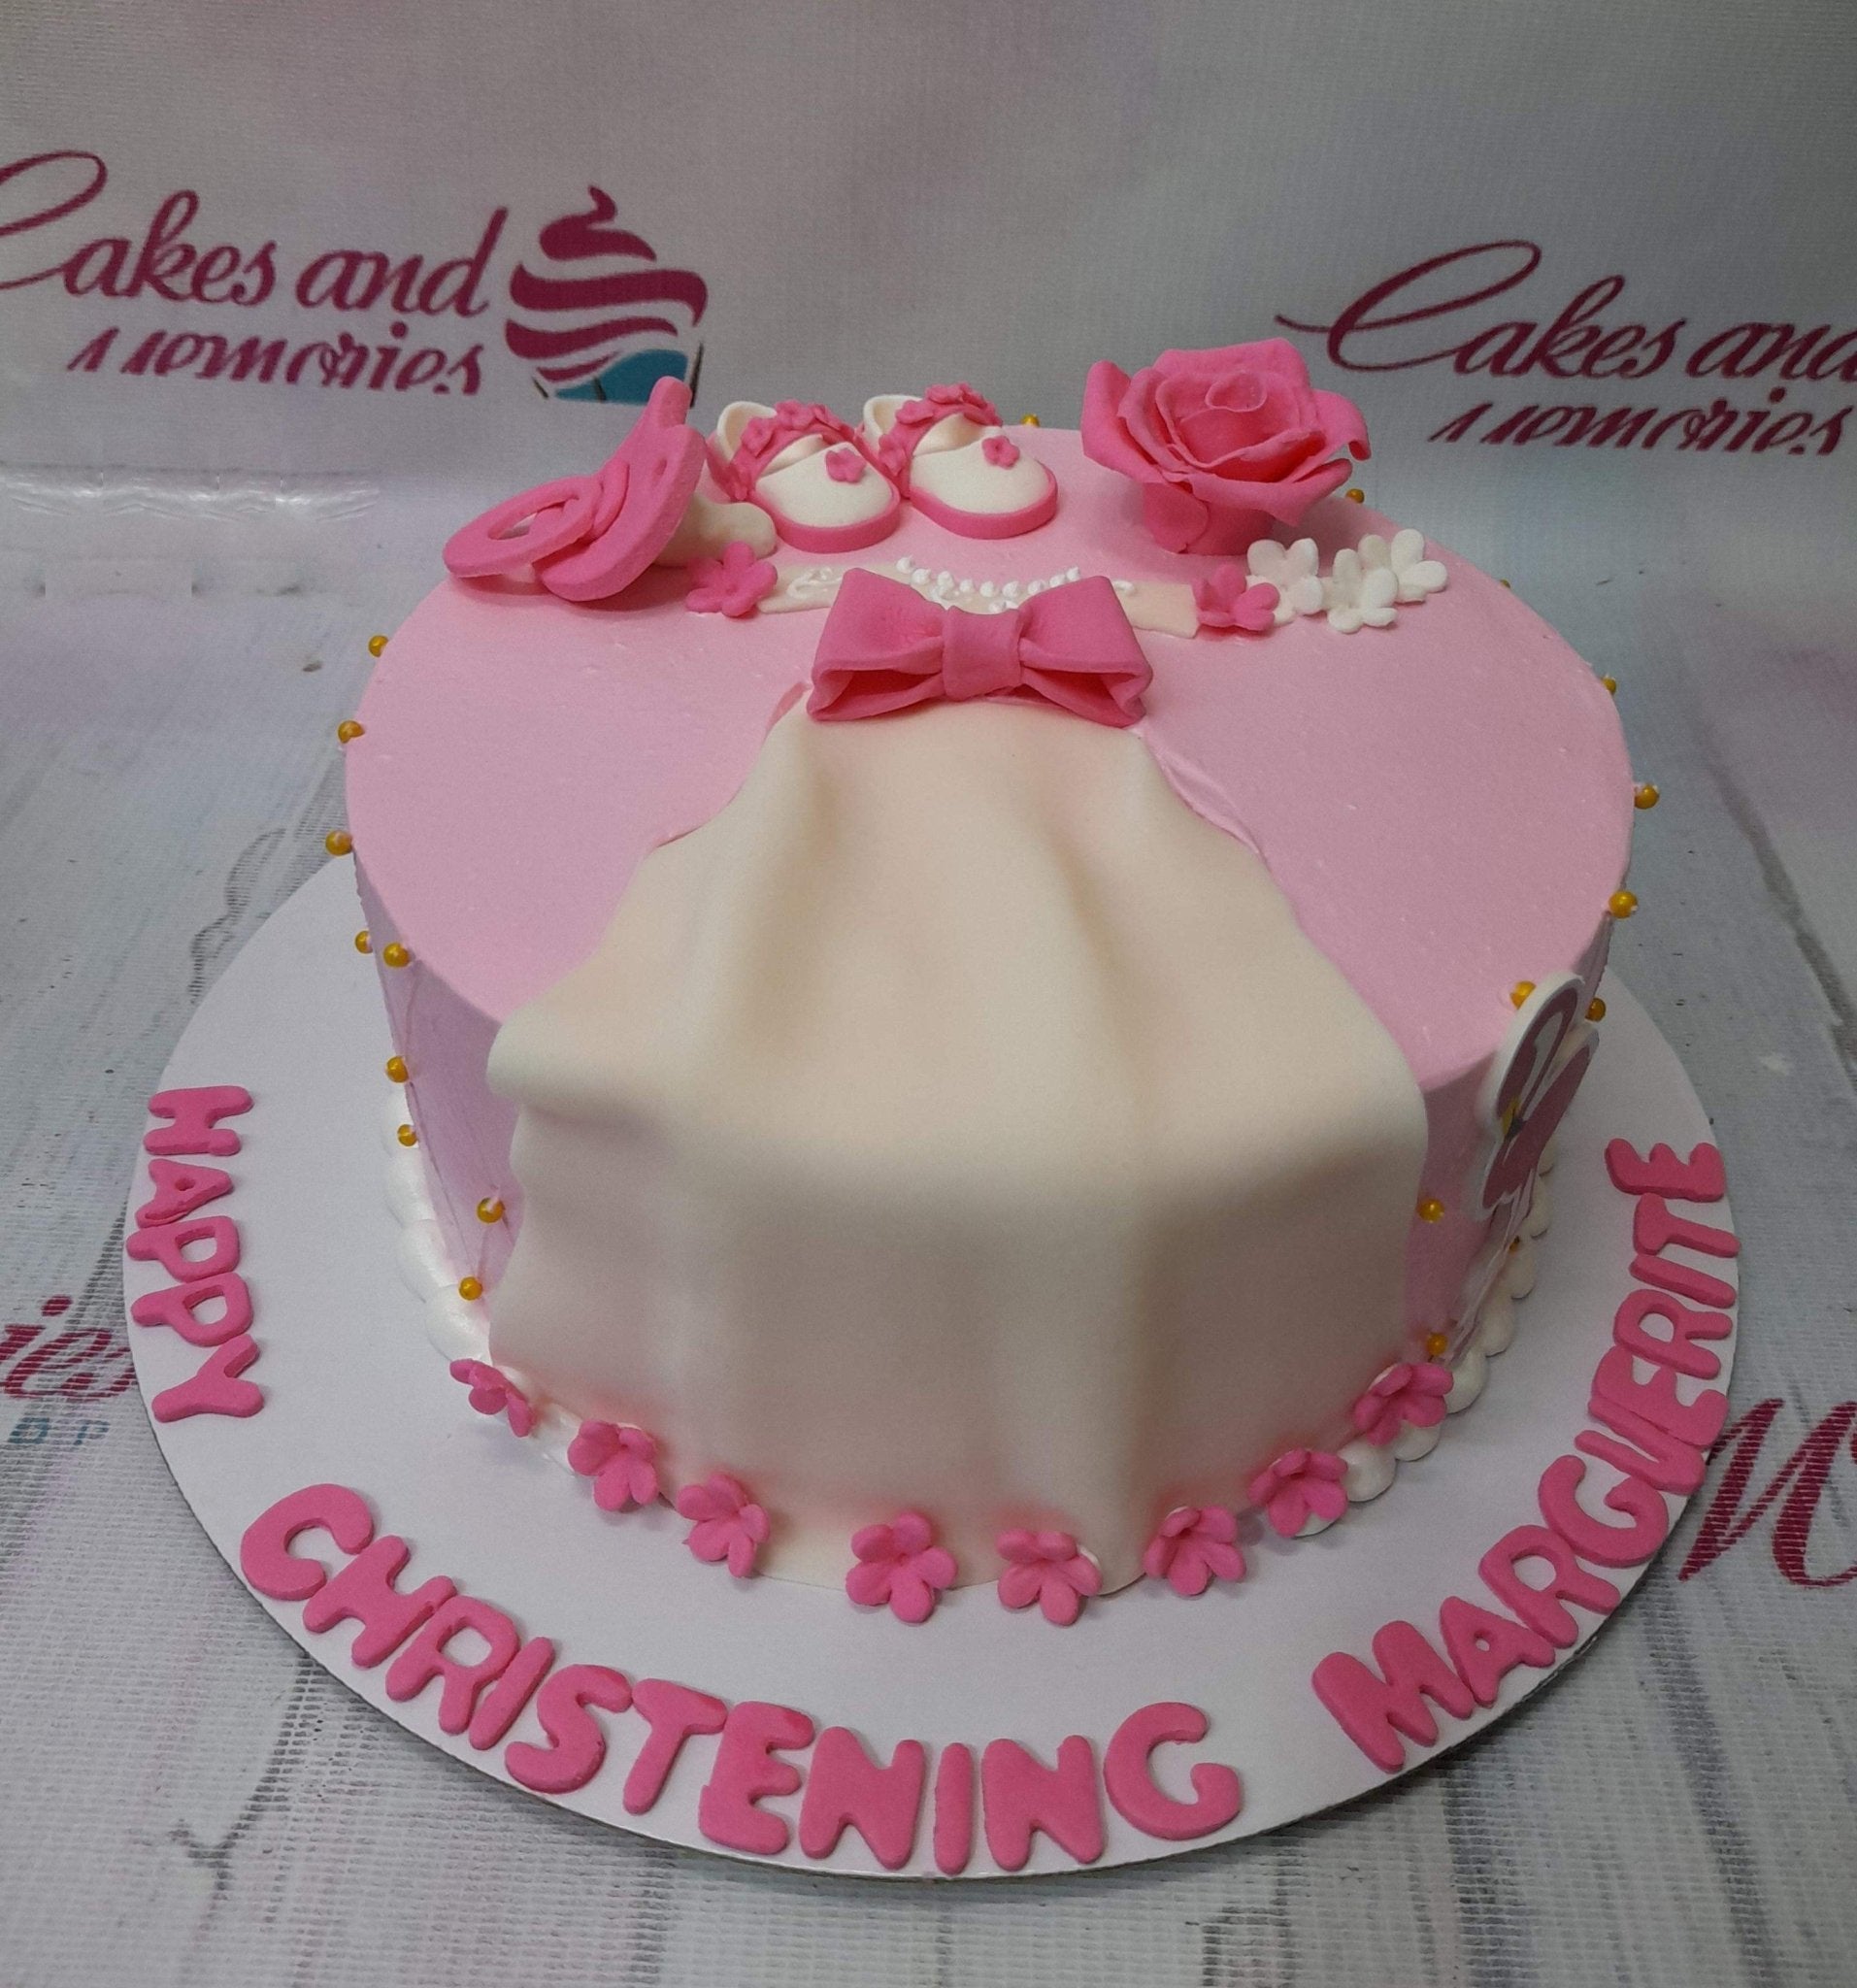 Christening Cakes - Quality Cake Company Tamworth